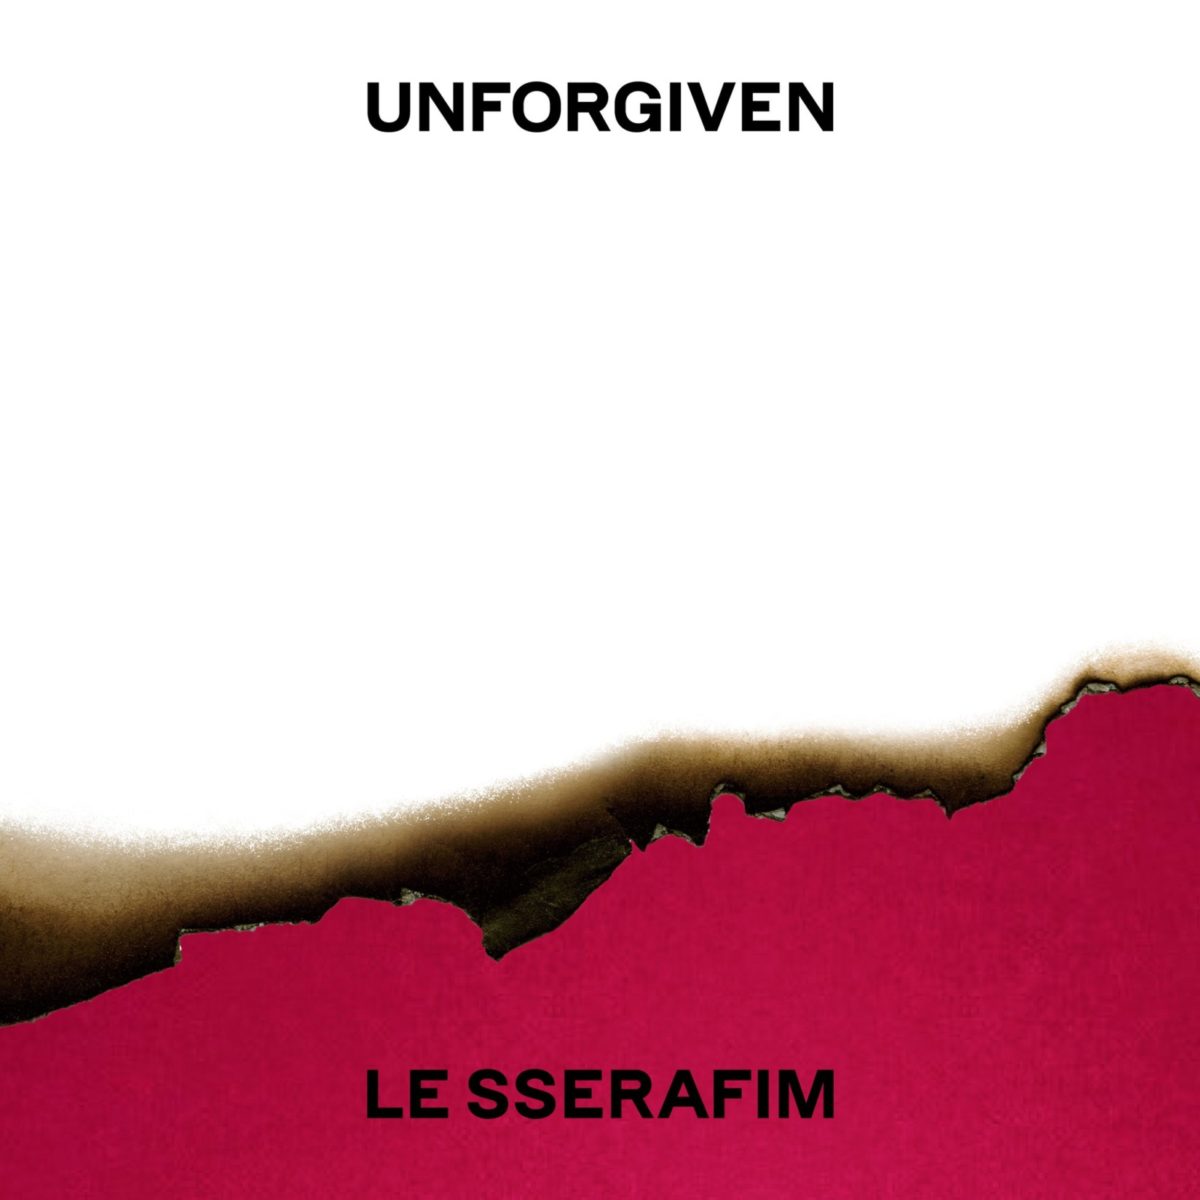 
LE SSERAFIM 「UNFORGIVEN (feat. Nile Rodgers)」
LE SSERAFIM (ルセラフィム)
KIM CHAEWON (キム・チェウォン)
SAKURA (サクラ)
HUH YUNJIN (ホ・ユンジン)
KAZUHA (カズハ)
HONG EUNCHAE (ホン・ウンチェ)